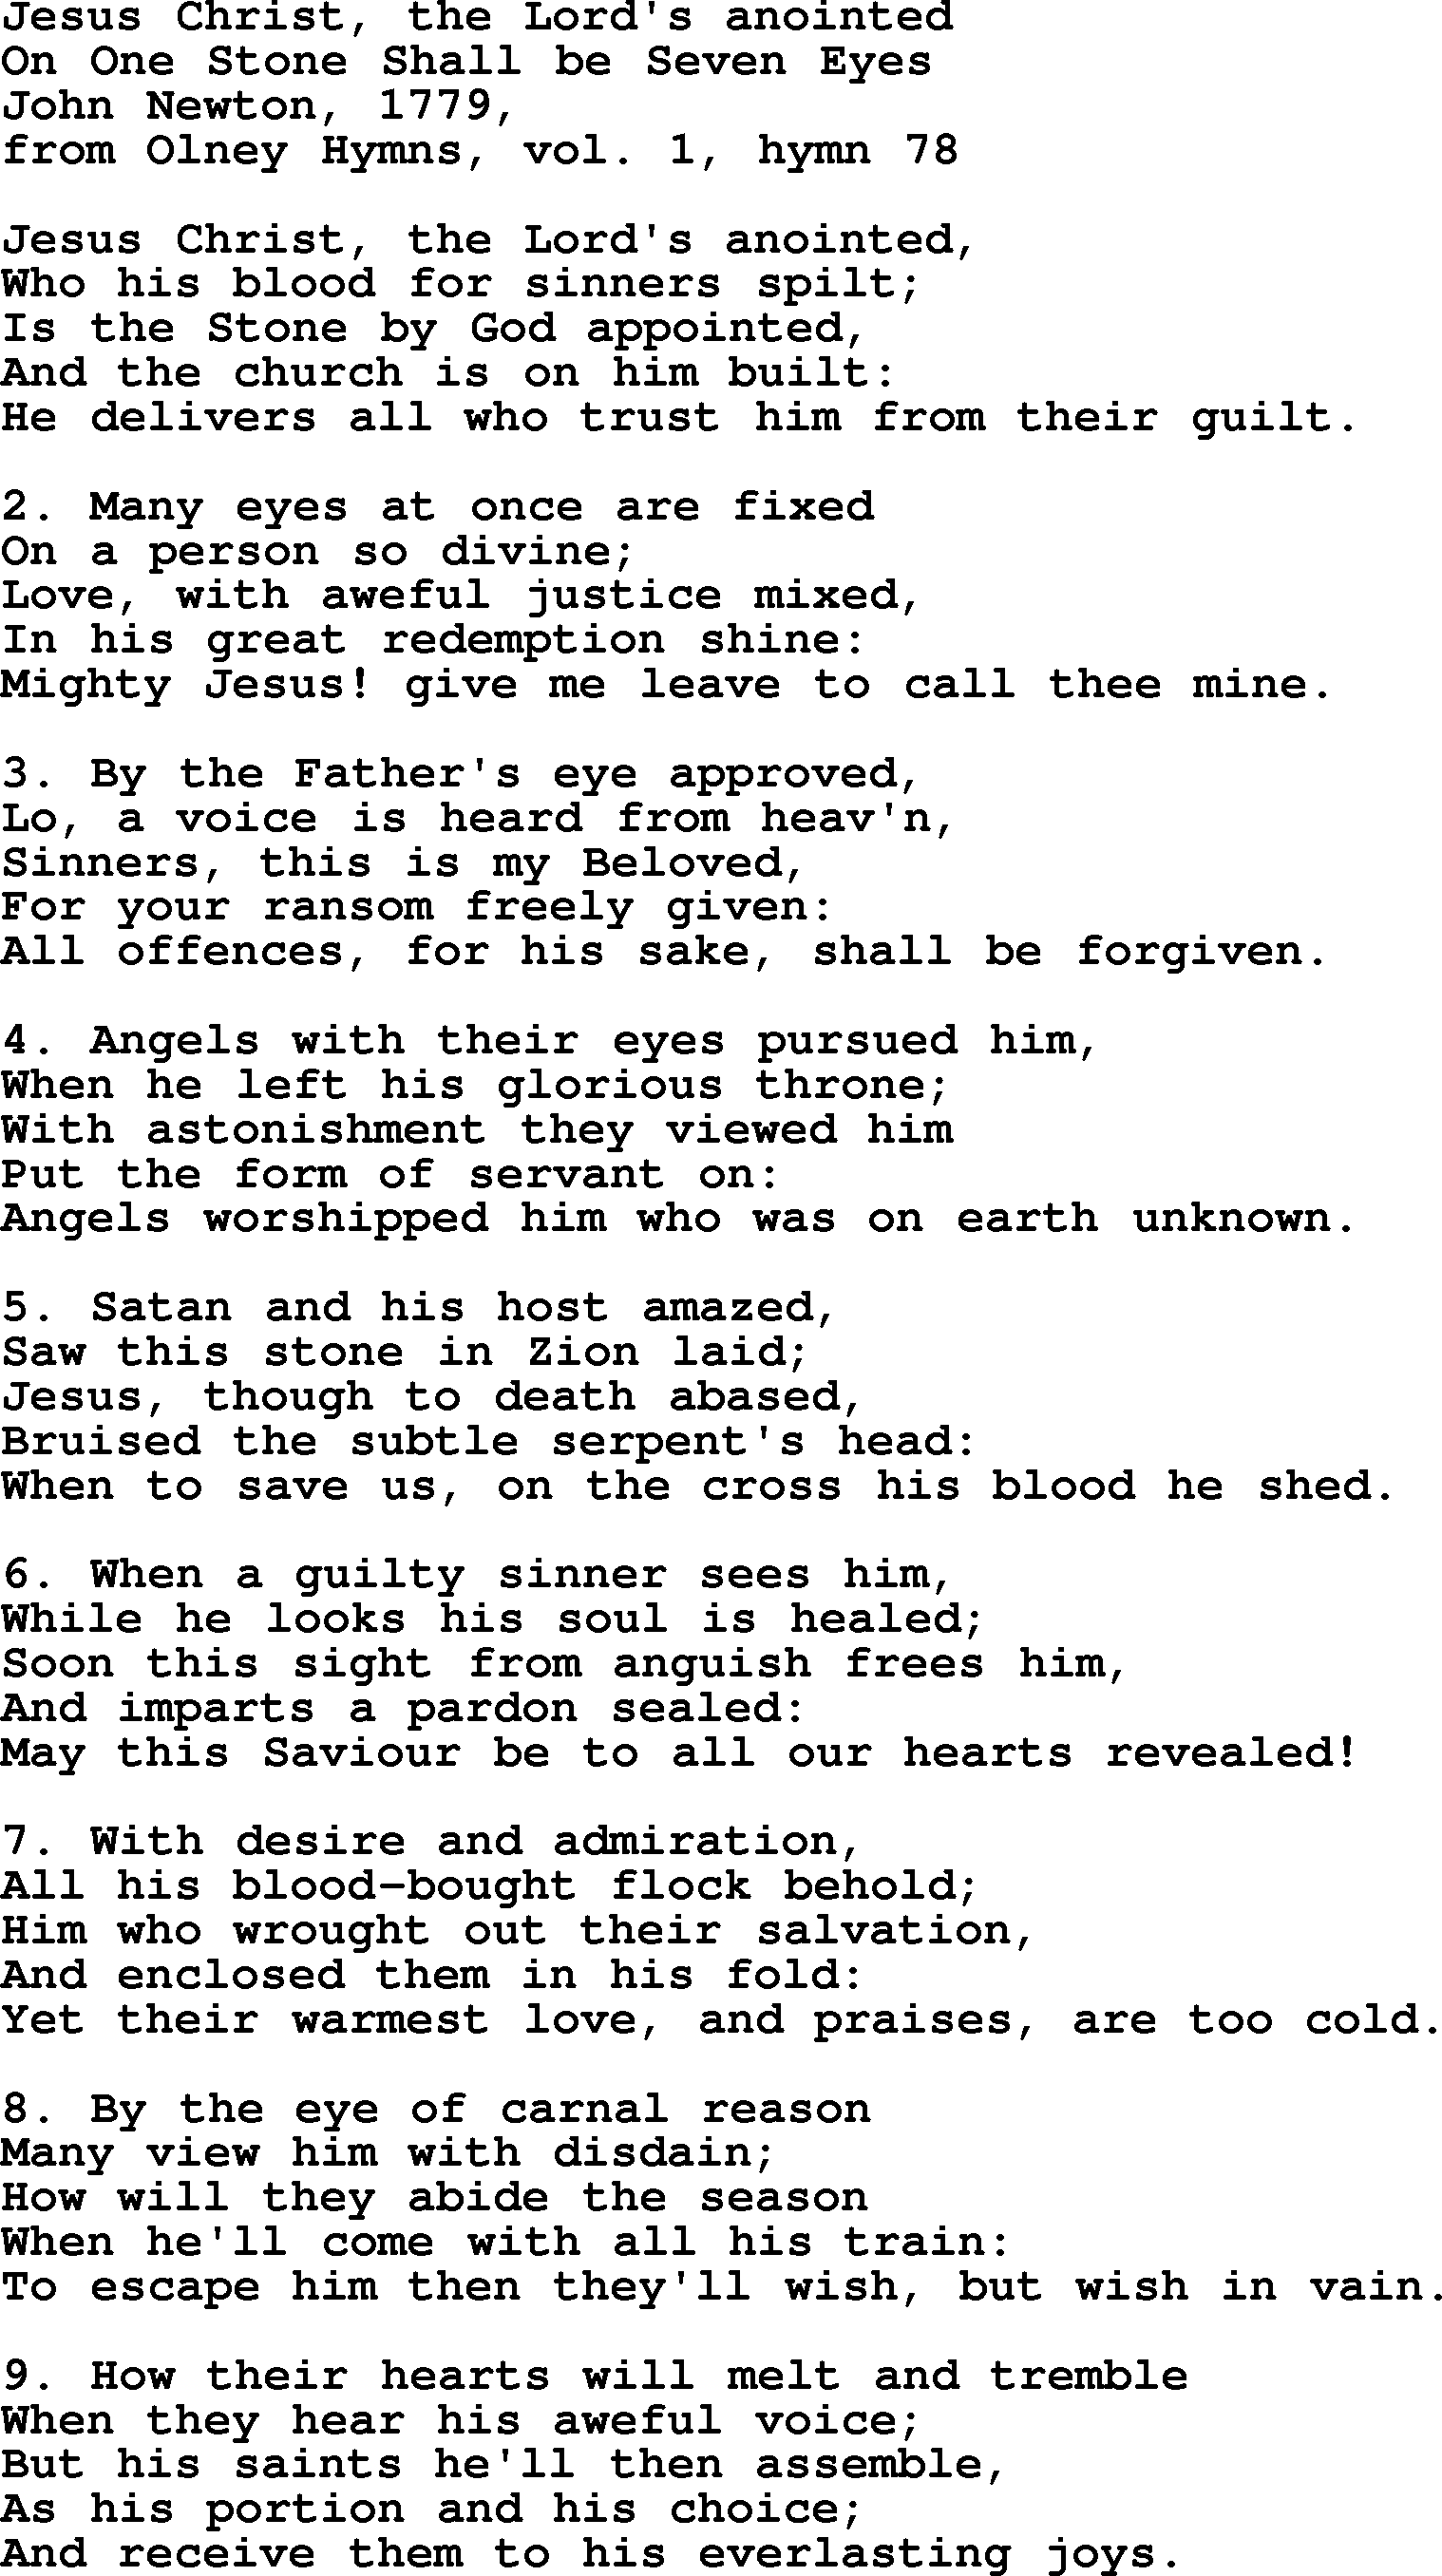 Jesus Christ, The Lord's Anointed, by John Newton - Christian hymn lyrics